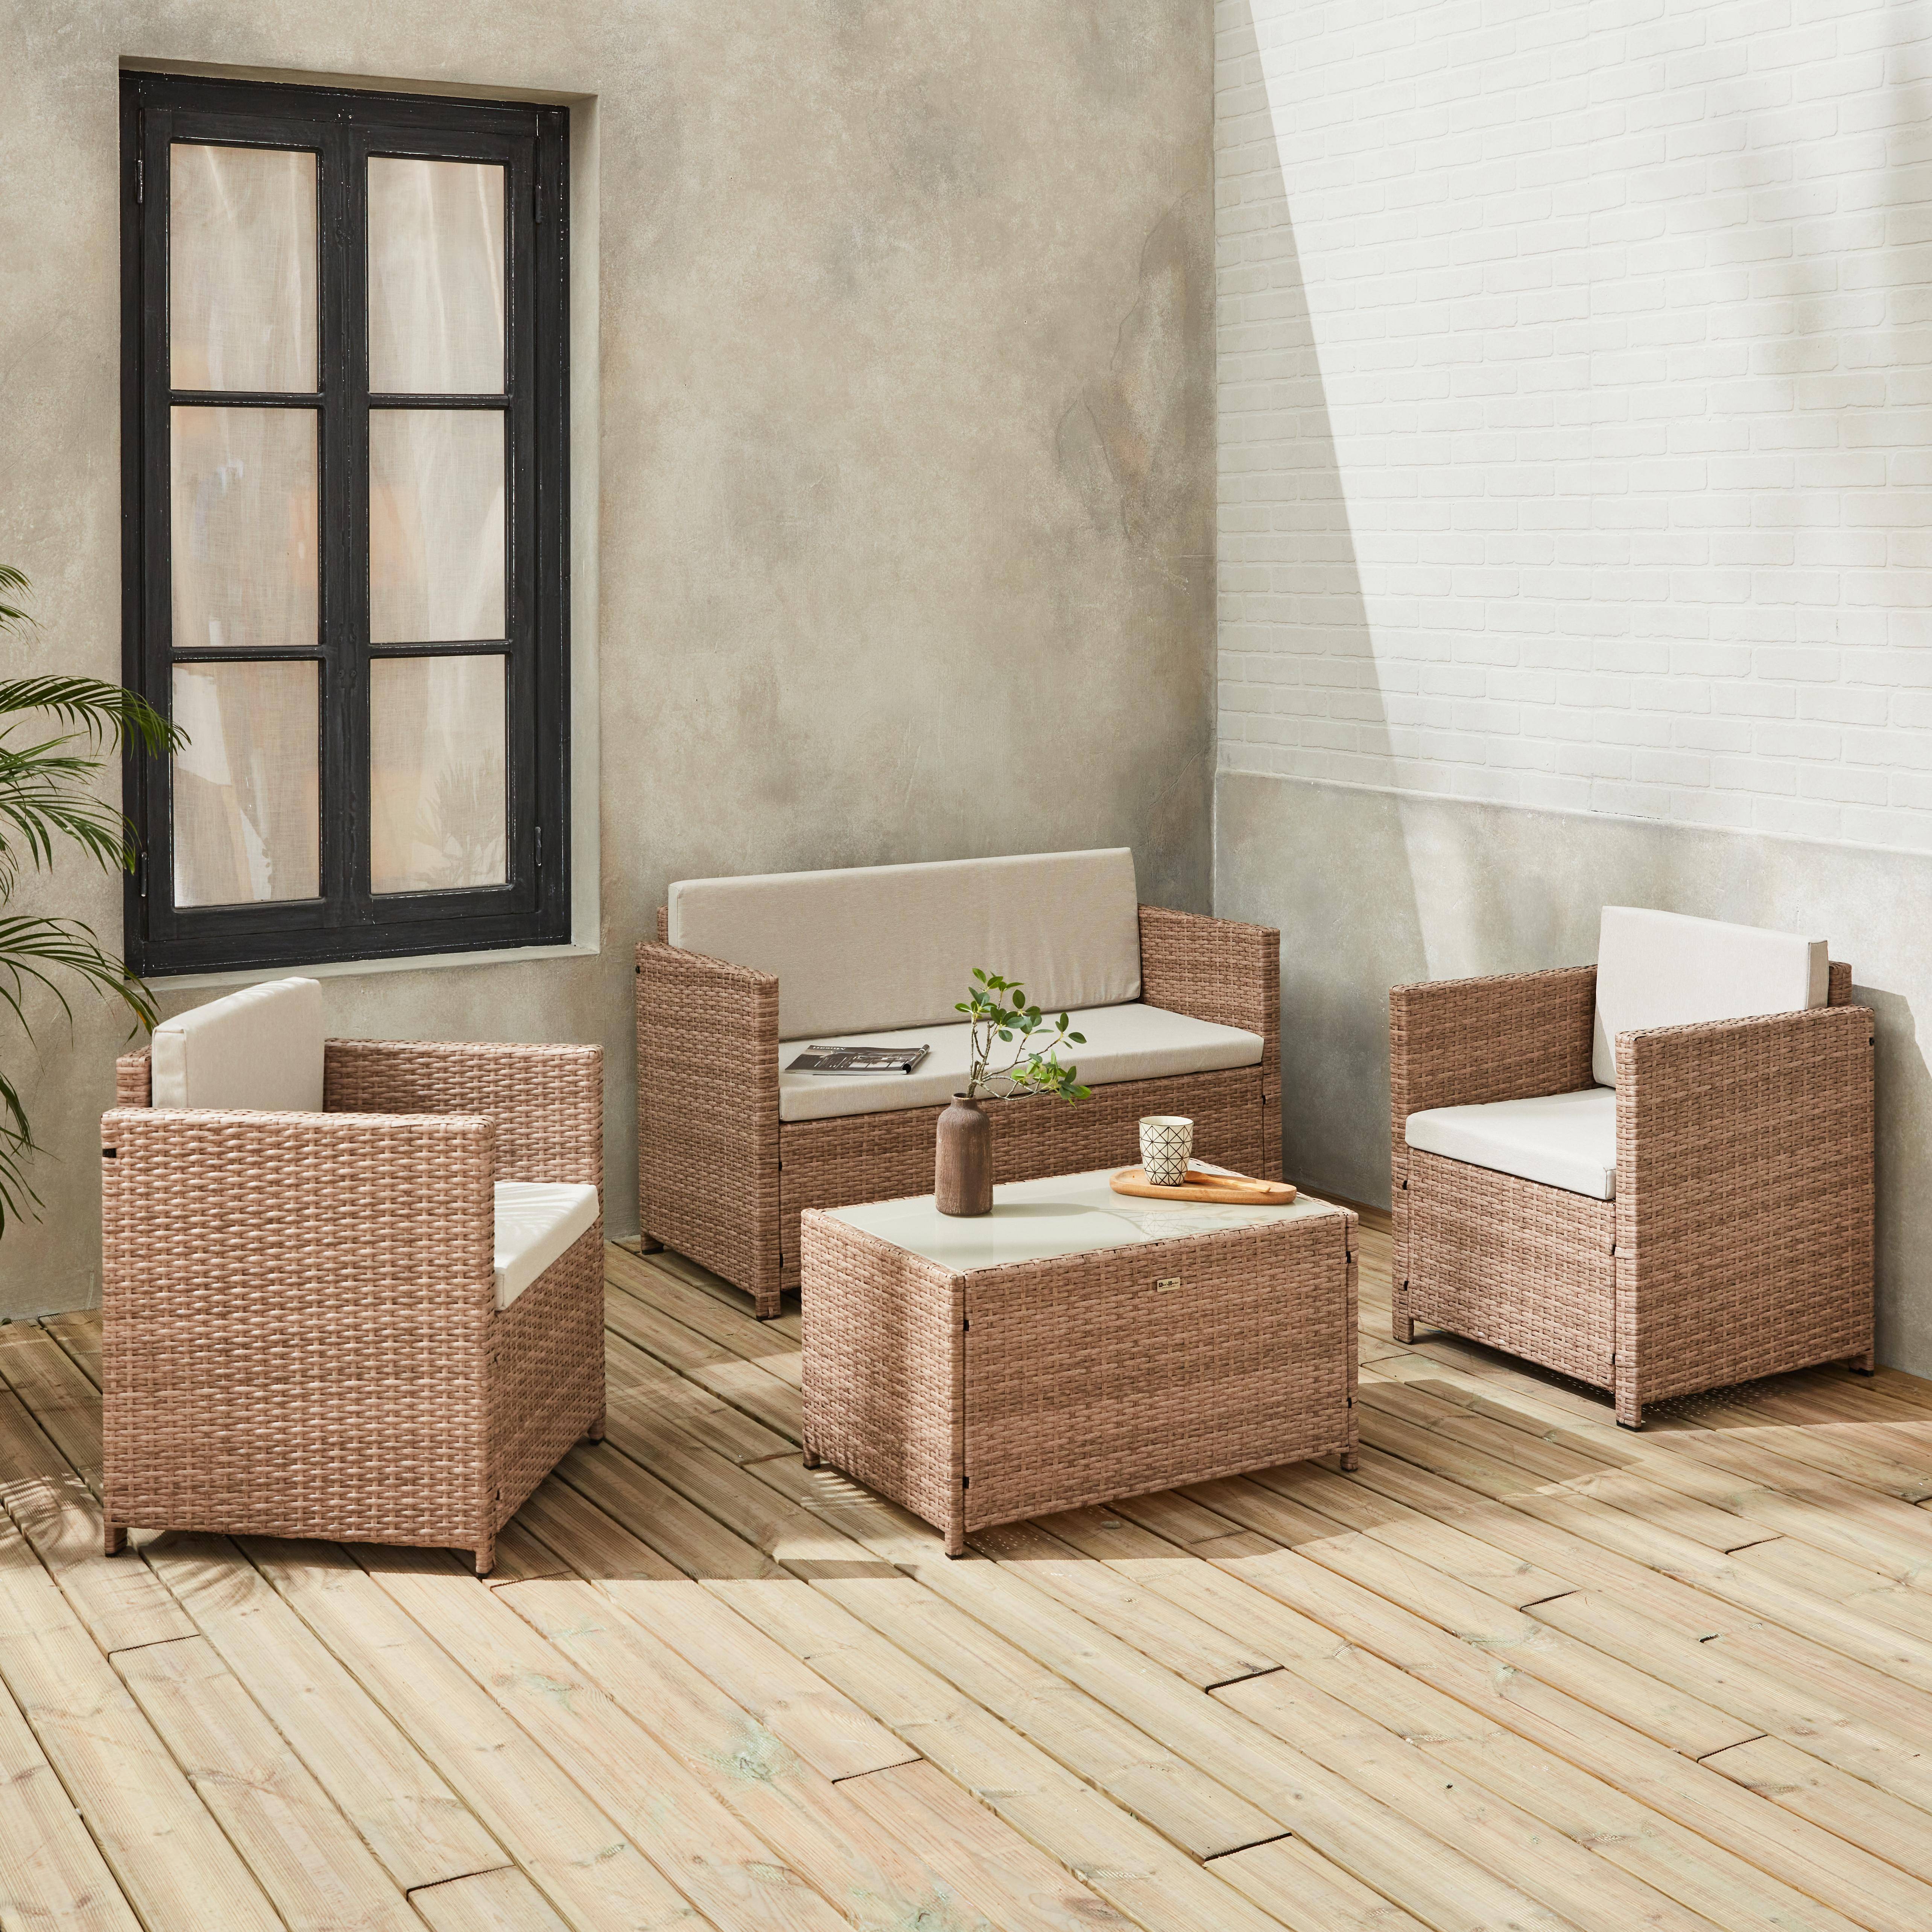 4-seater polyrattan garden sofa set - sofa, 2 armchairs, coffee table - Perugia - Natural Beige rattan, Beige cushions,sweeek,Photo1